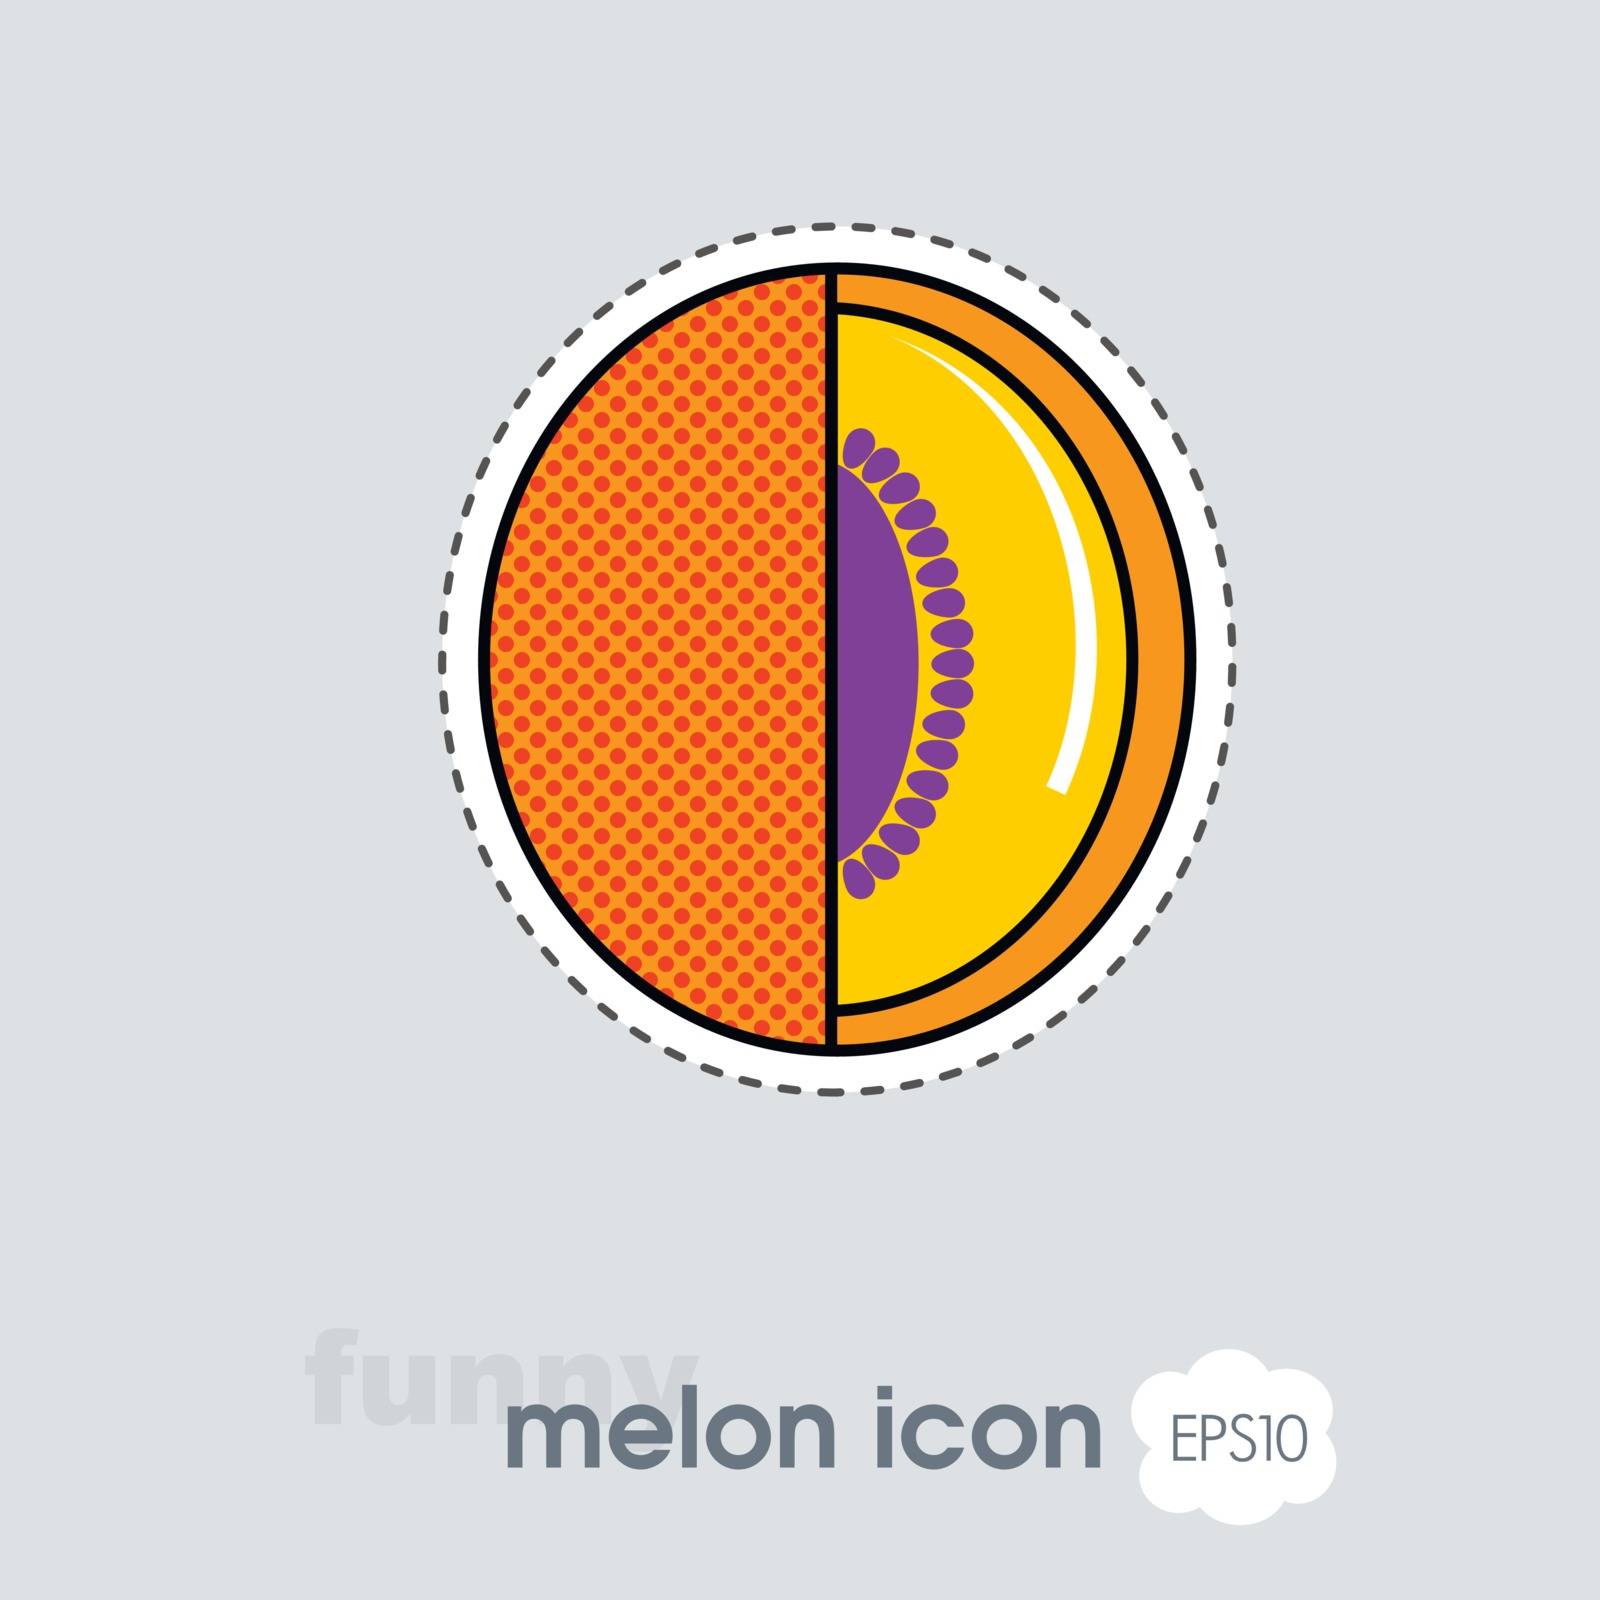 Melon icon. Melon fruit sign by nosik